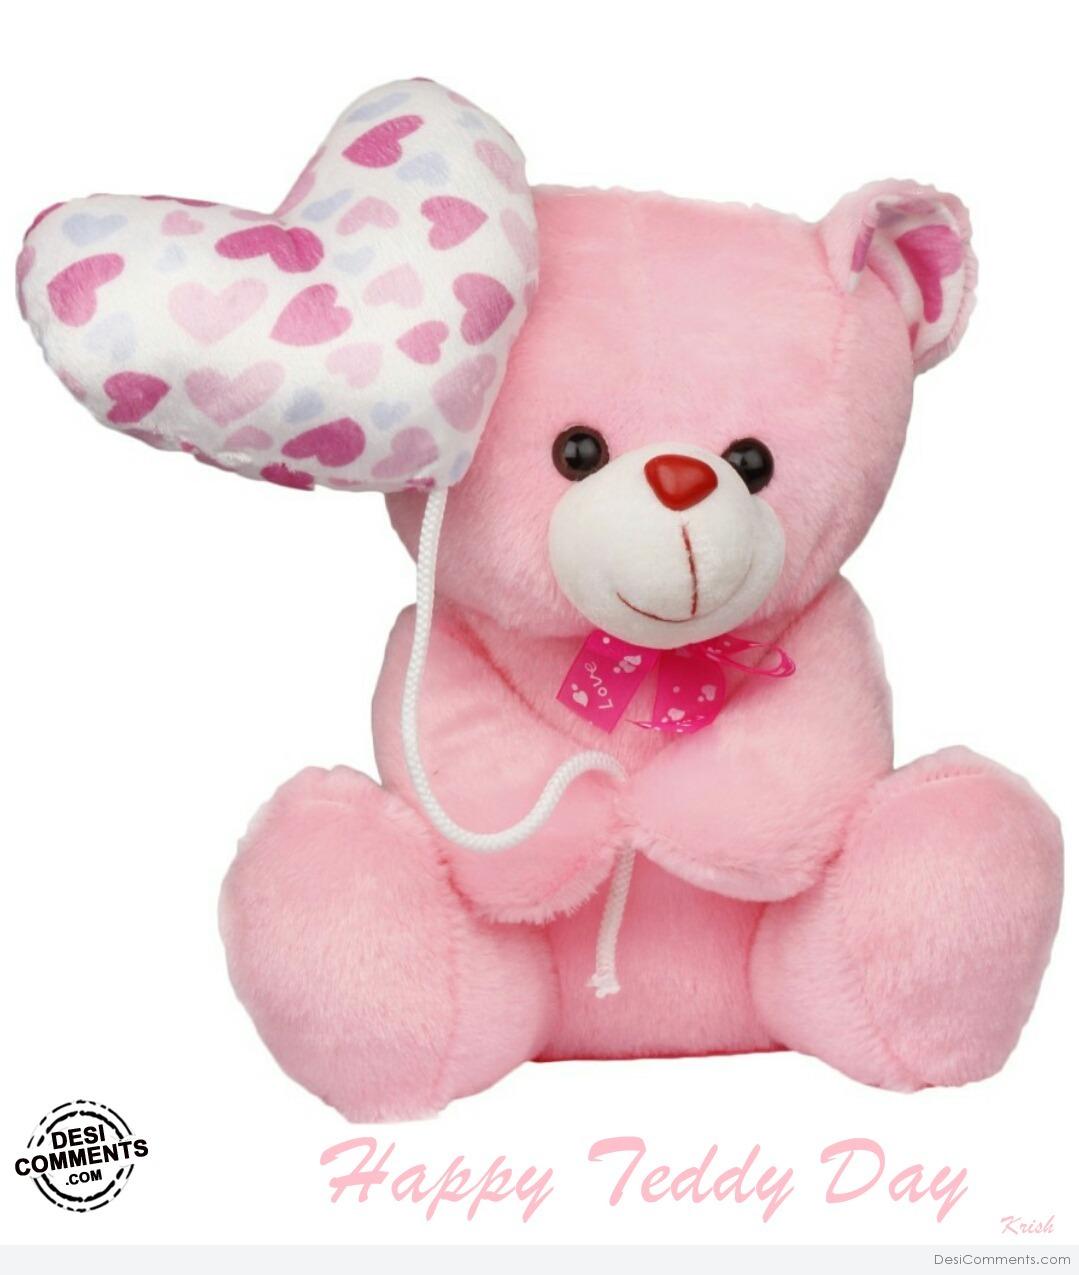 Happy Teddy Day 2017 Cute Pink Teddy With Heart